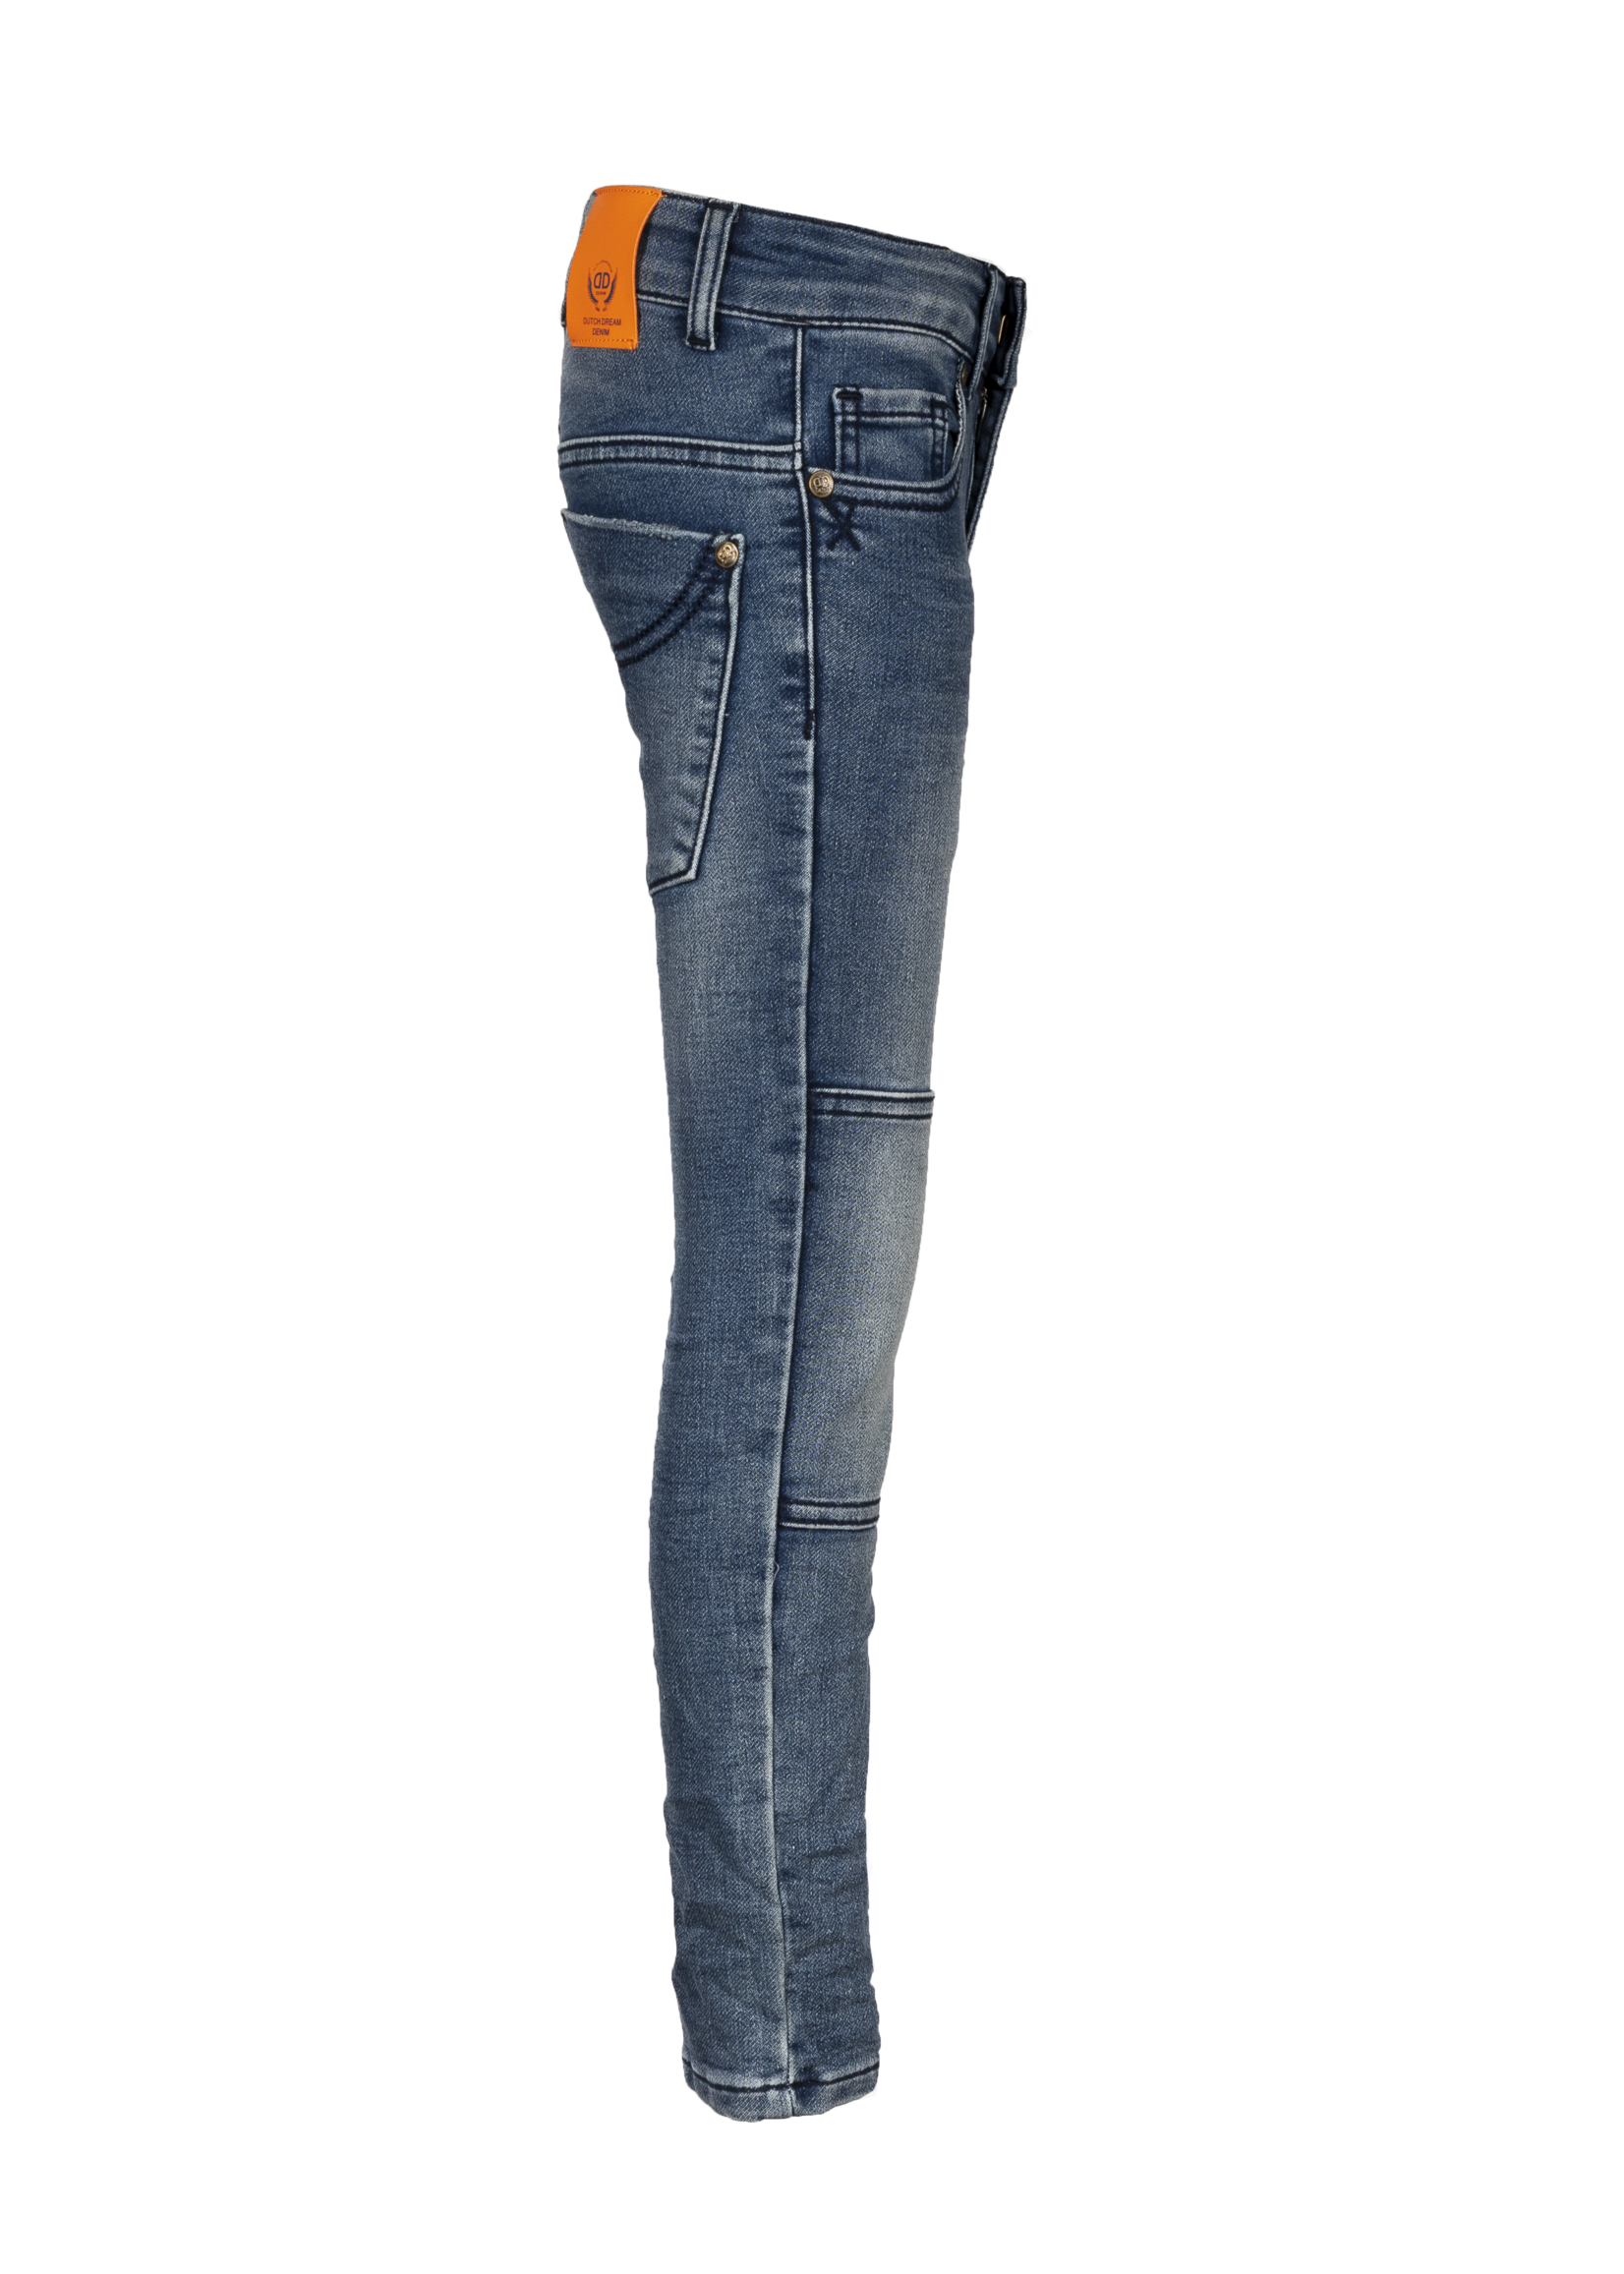 Dutch dream denim FIGO, EXTRA SLIM FIT Jogg jeans met dubbele laag stof op de knieën